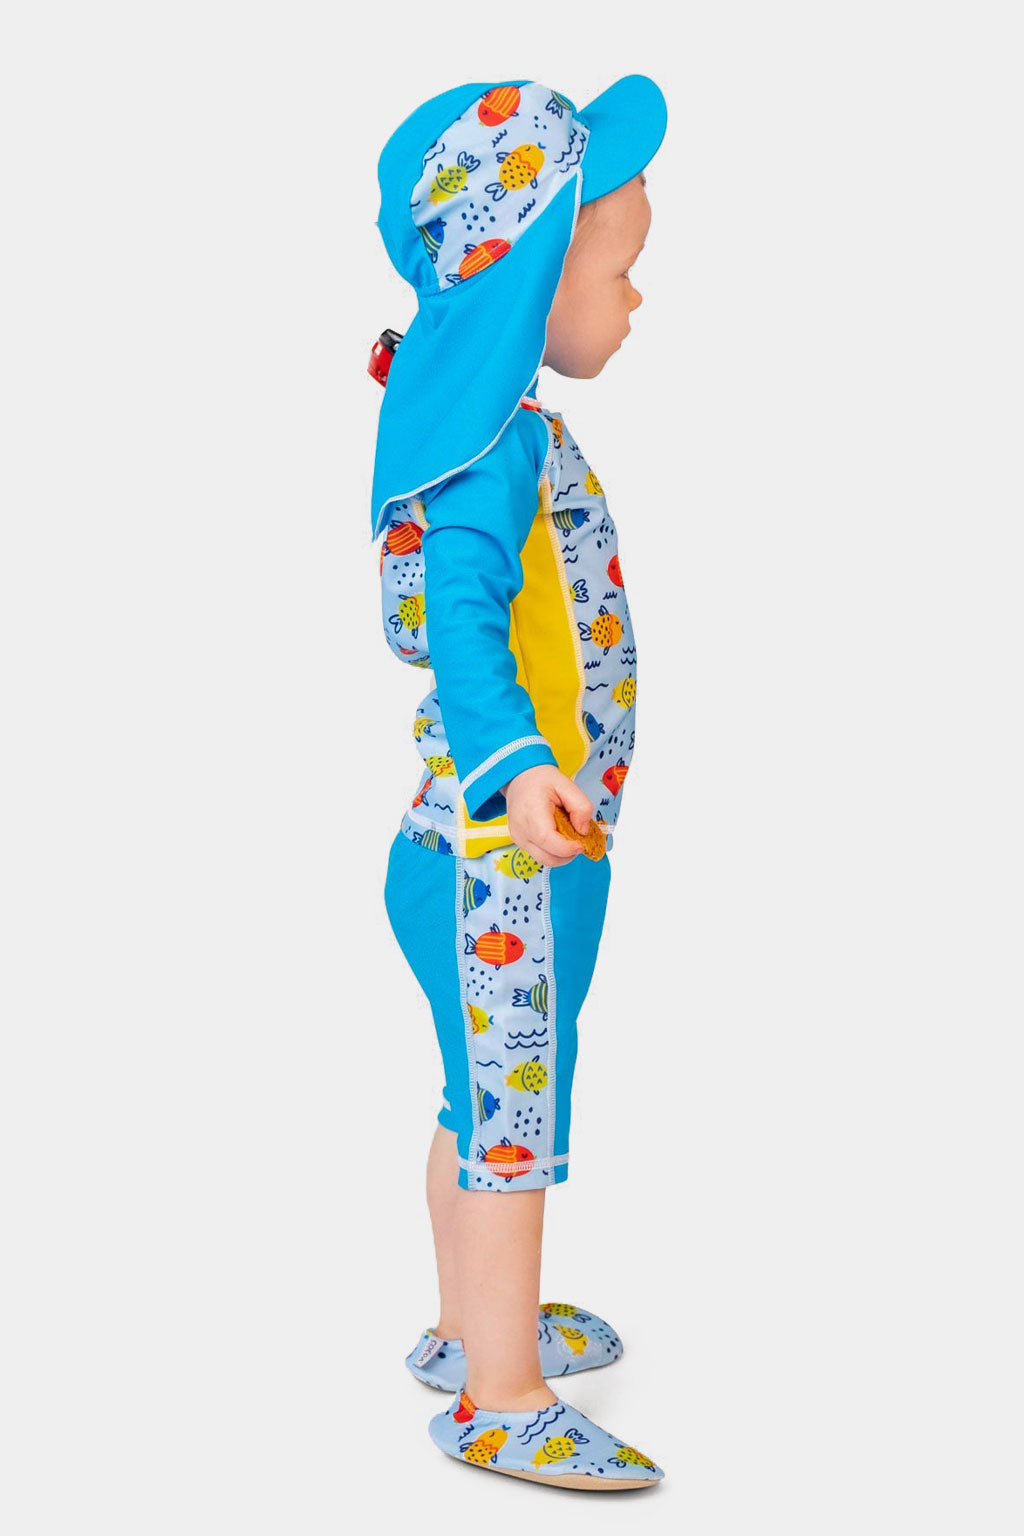 Coega - Boys Baby Swim Suit Two Piece